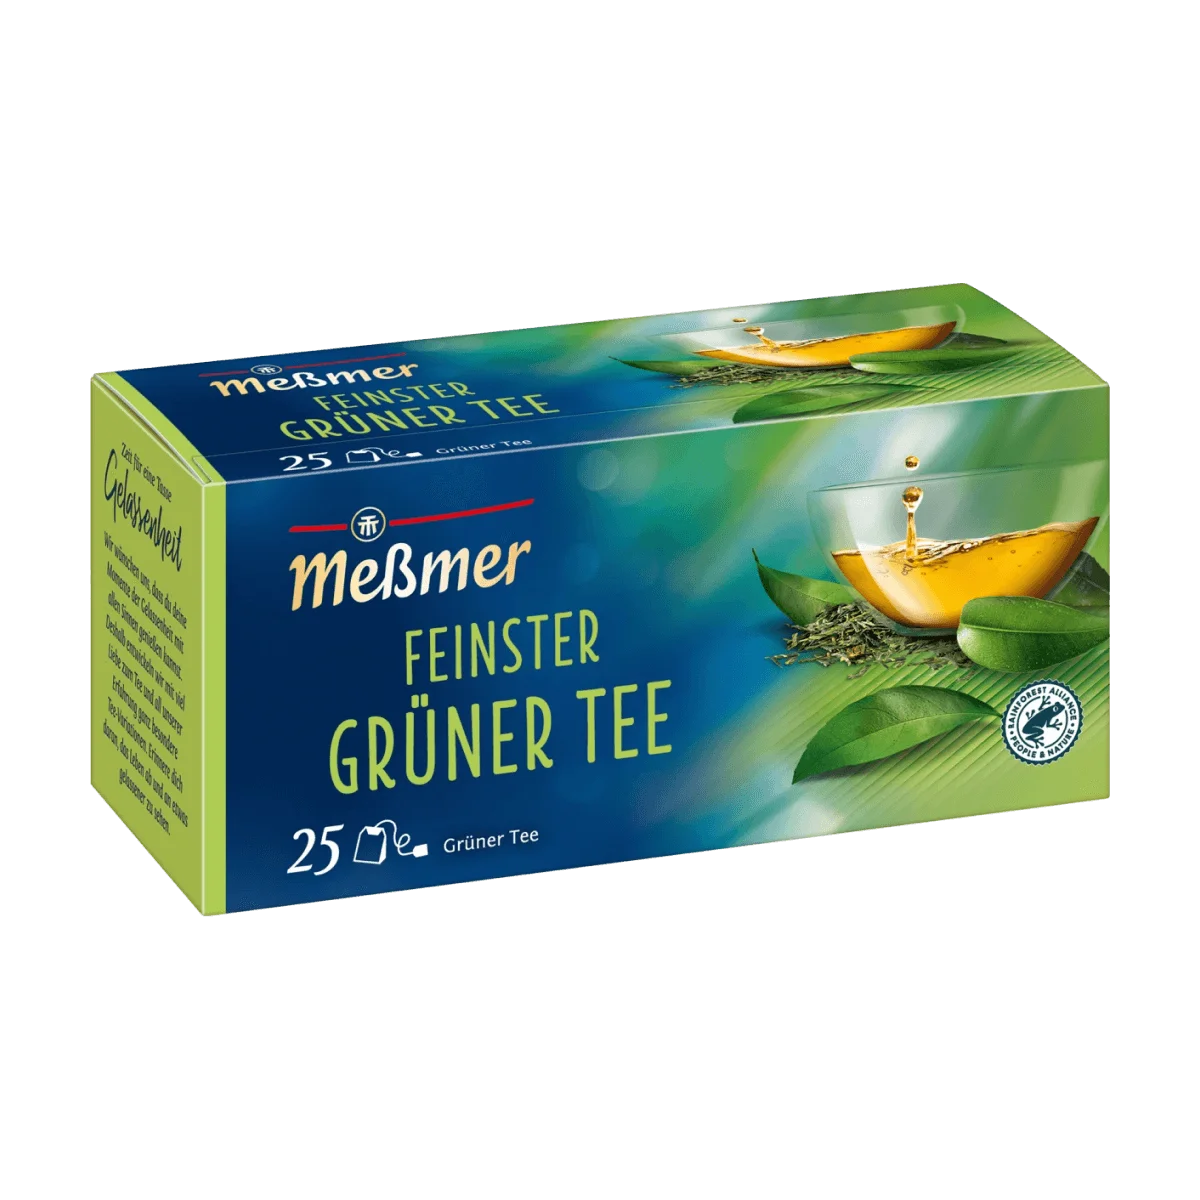 Meßmer Grüner Tee (25 Beutel), 43.75 g